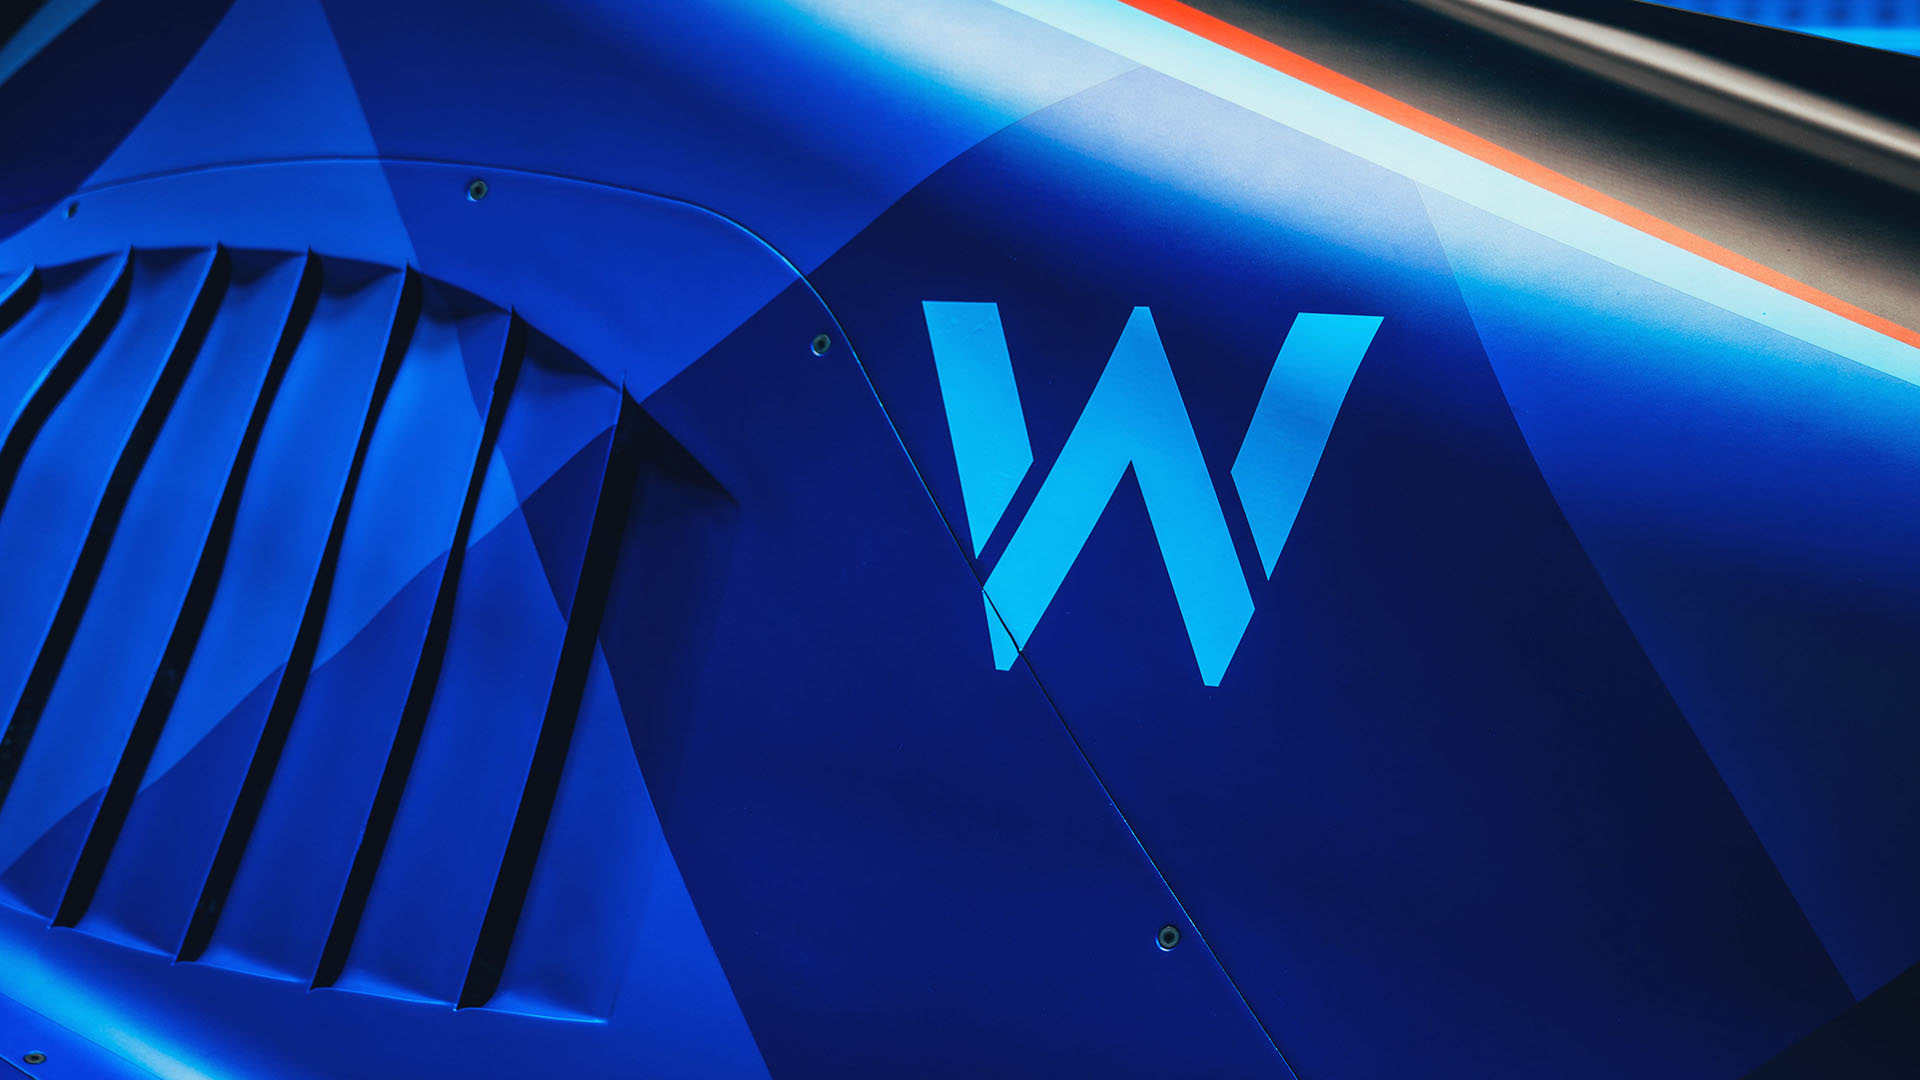 FW45 Livery - Williams Logo.jpg